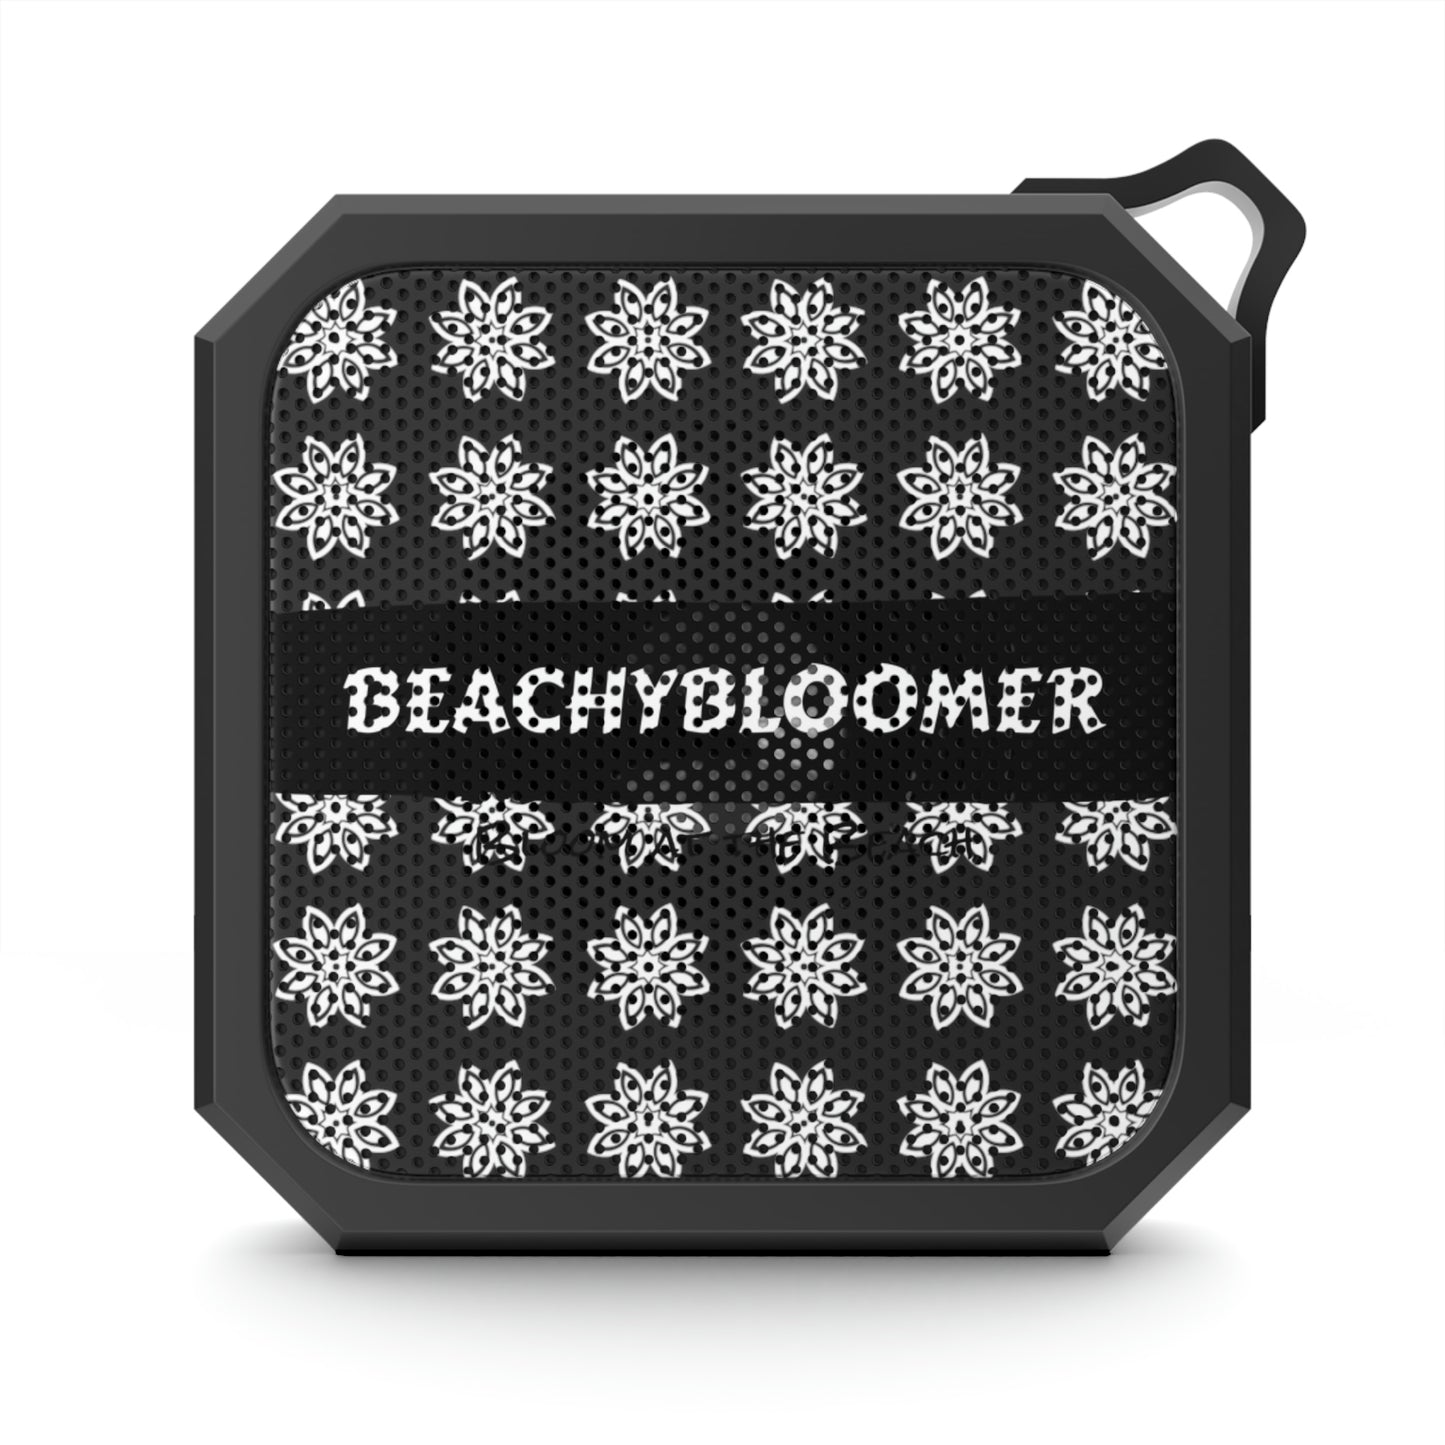 'Blackwater' Outdoor Bluetooth Speaker